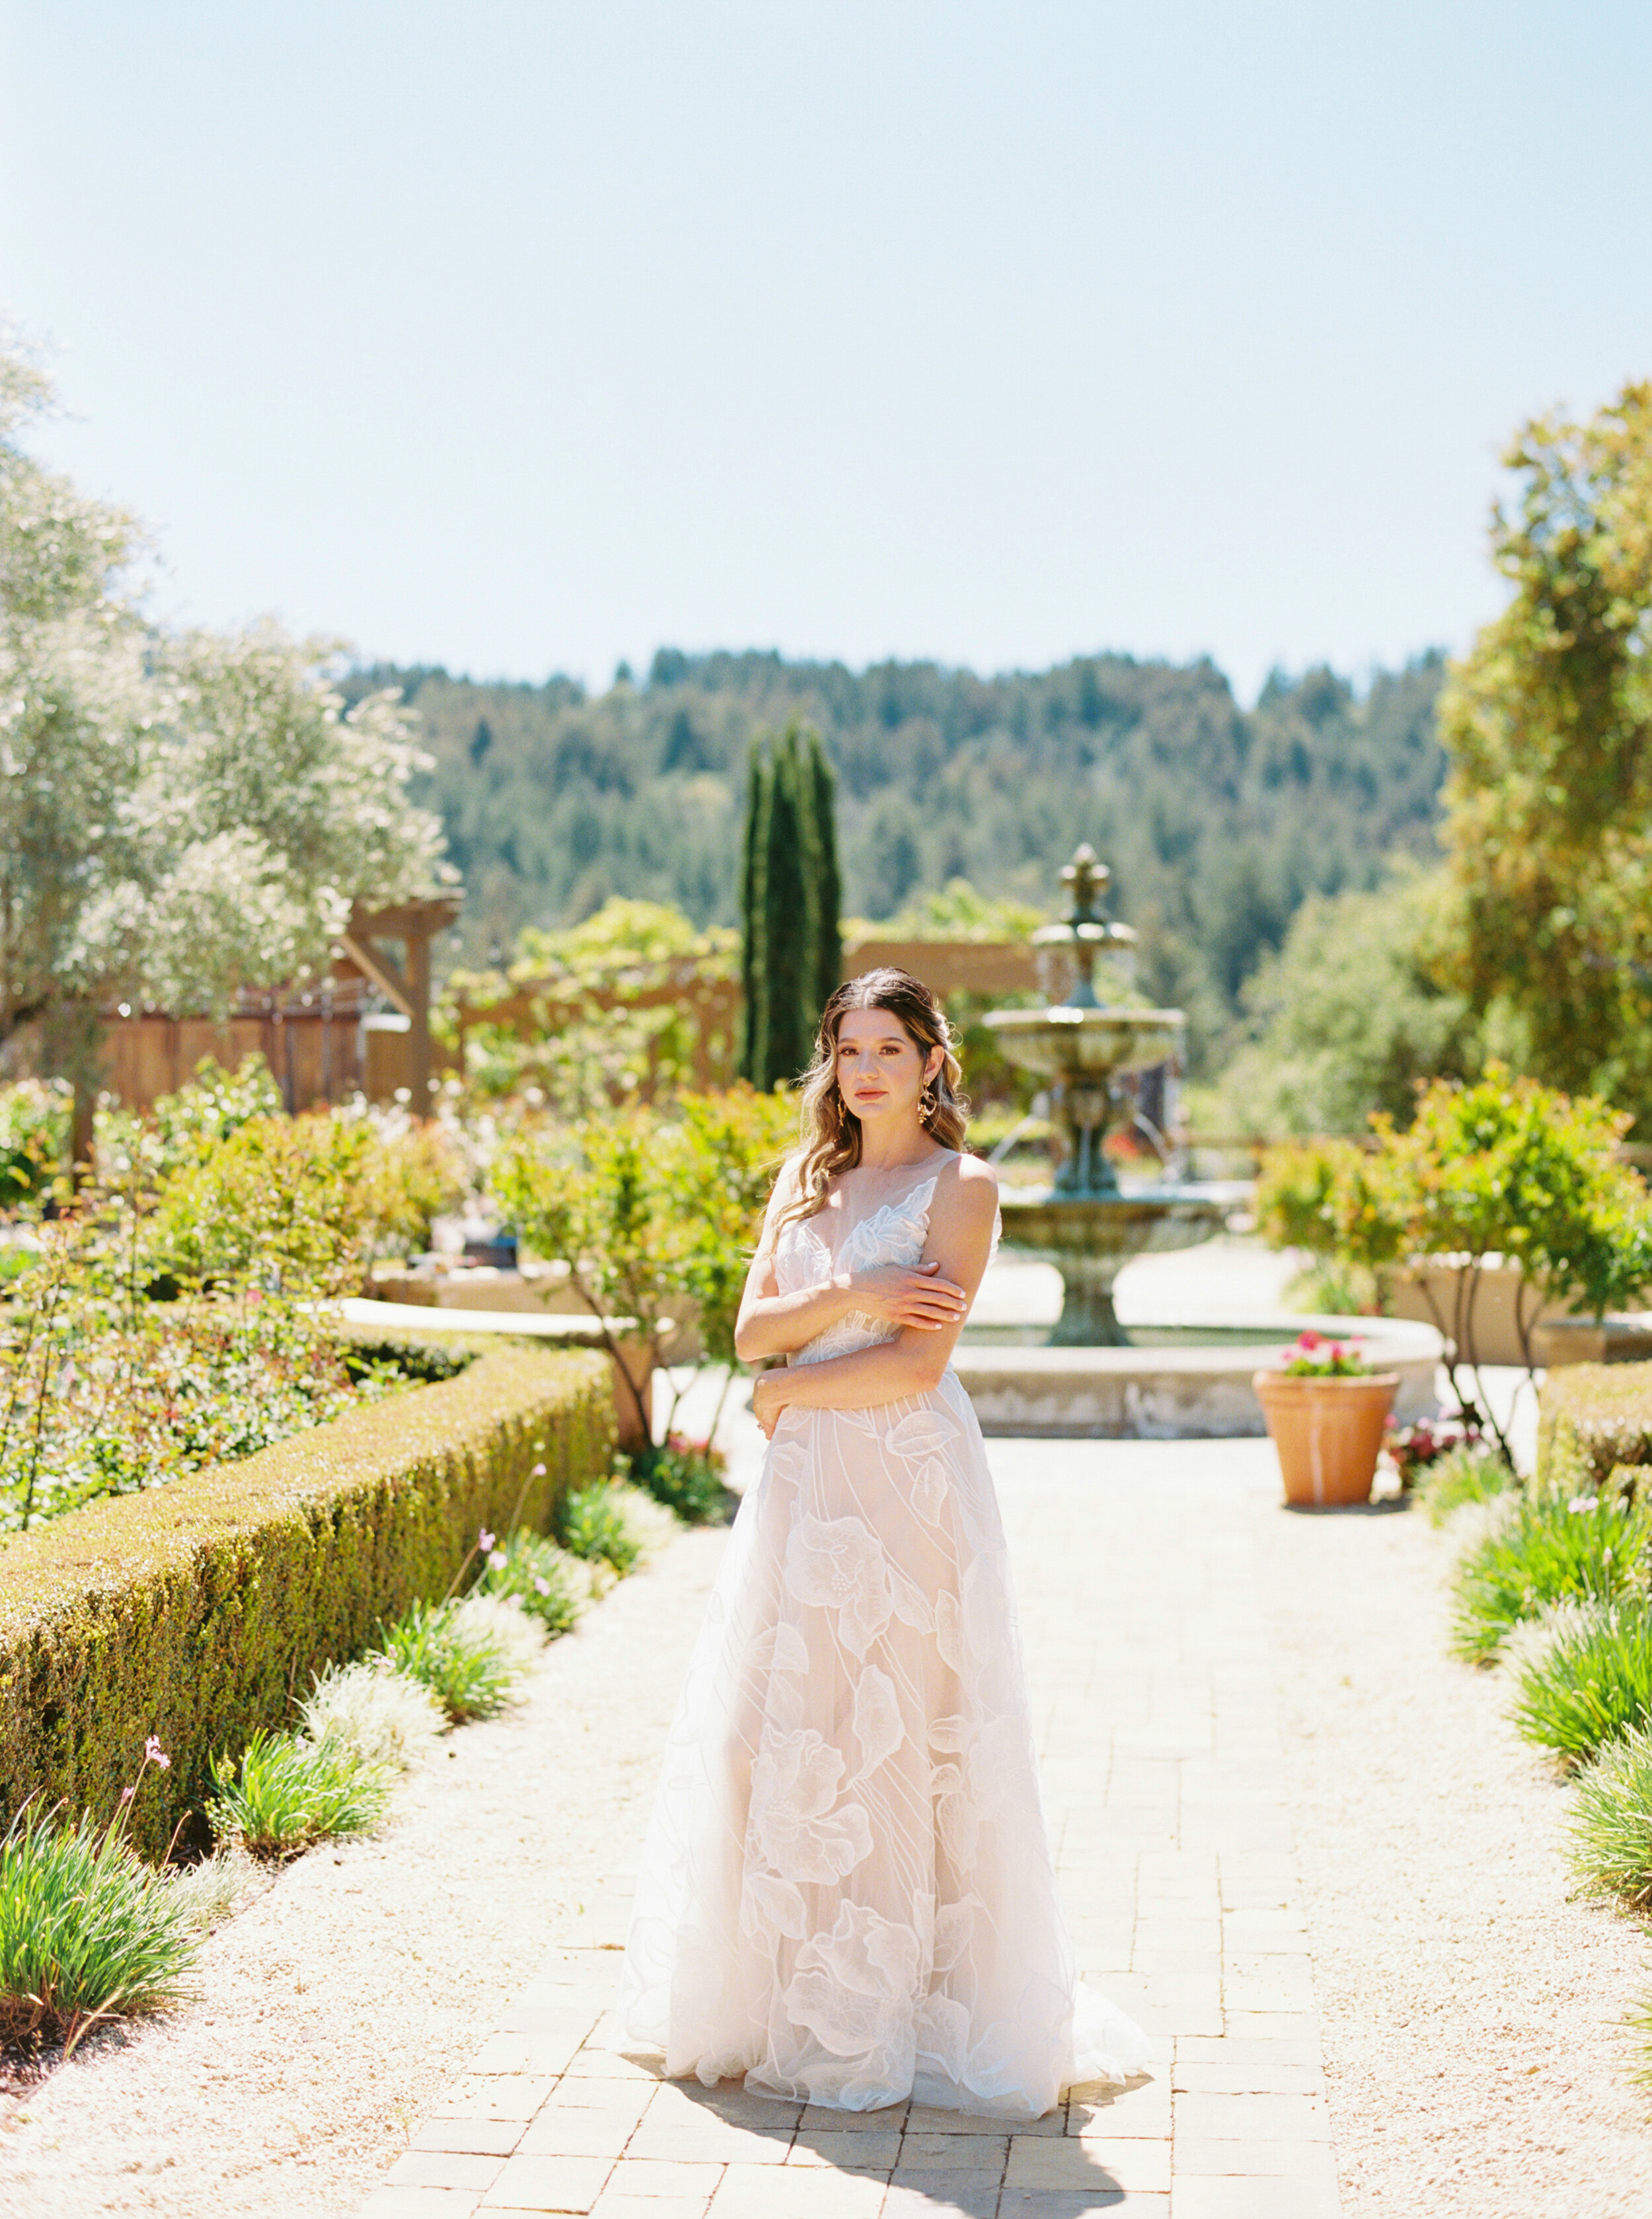 Regale Winery and Vineyards Wedding - Sarahi Hadden Photography-420.jpg